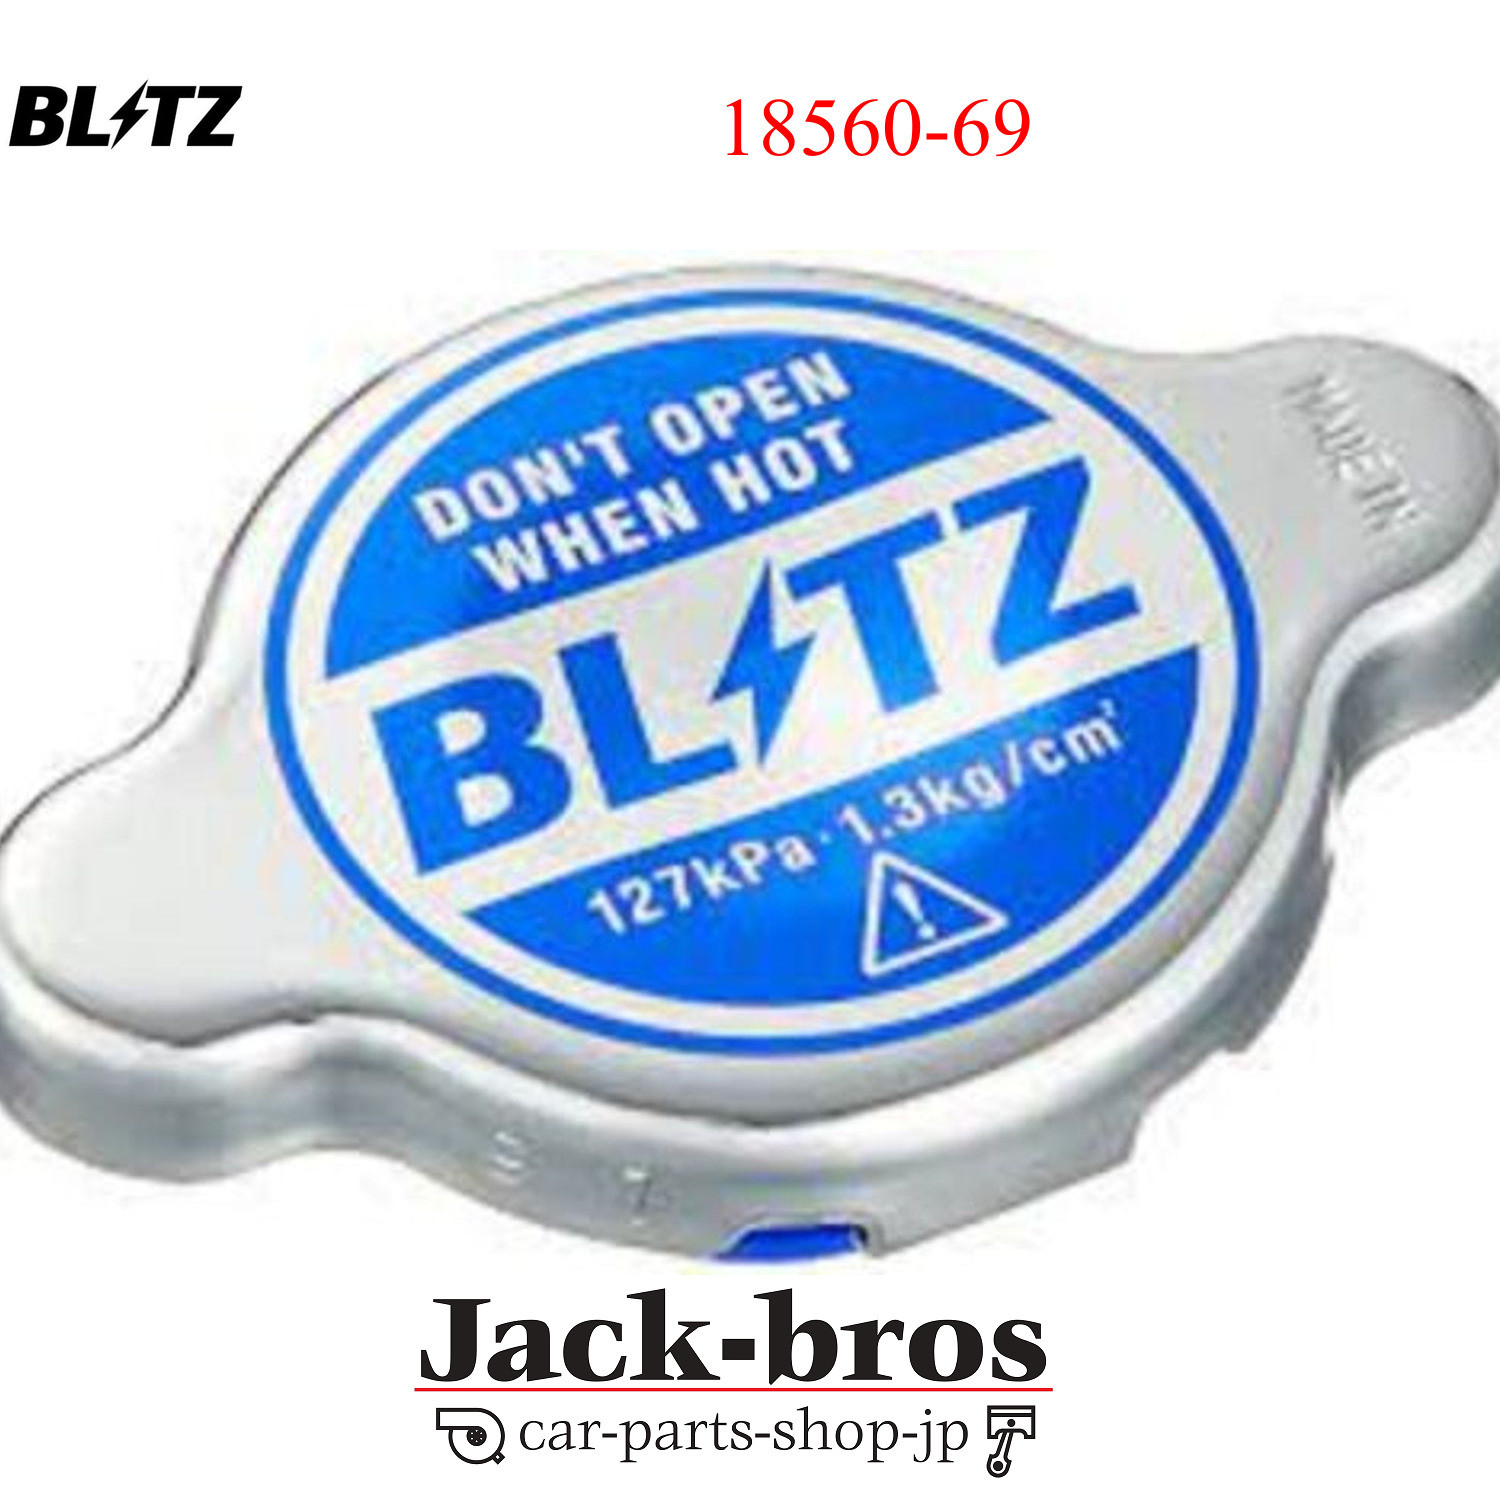 BLITZ Genuine OEM RACING RADIATOR CAP TYPE 1 For GLORIA HY33 HBY33 18560-69